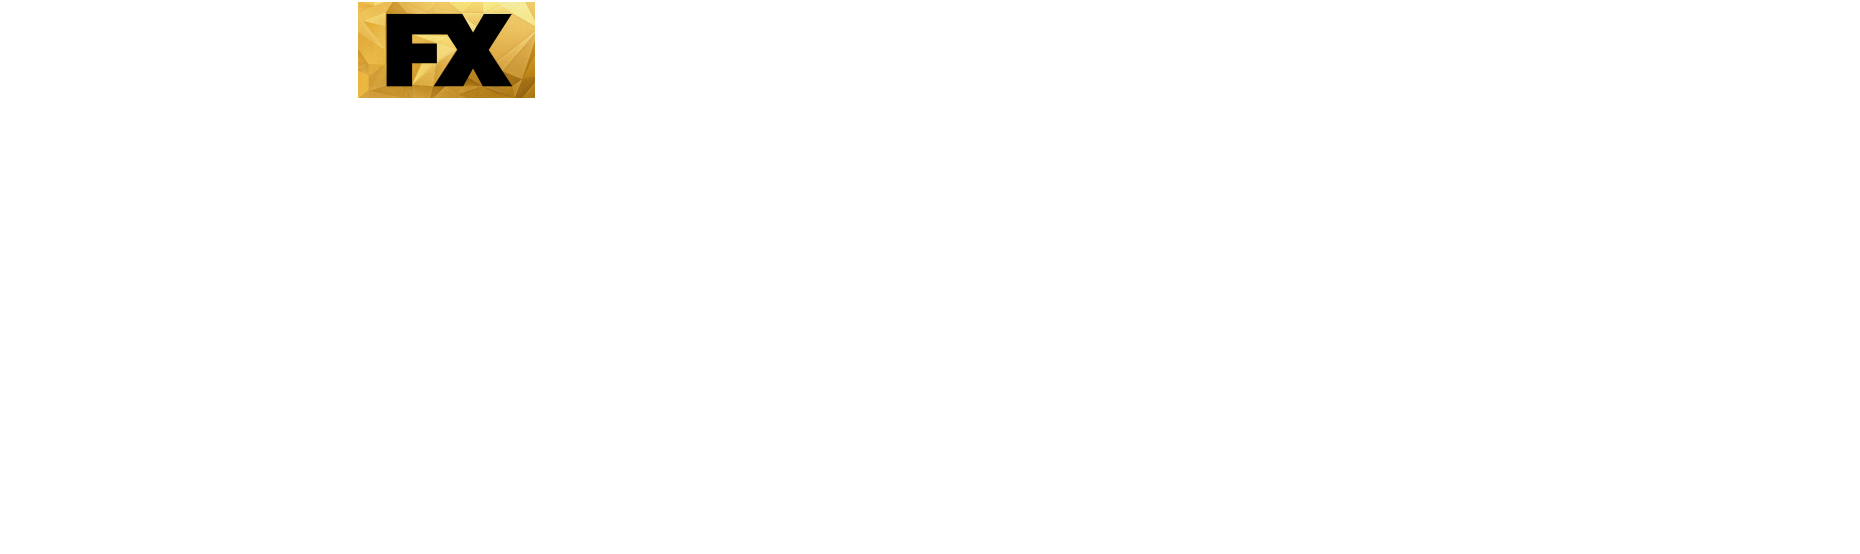 The Choe Show Show Logo